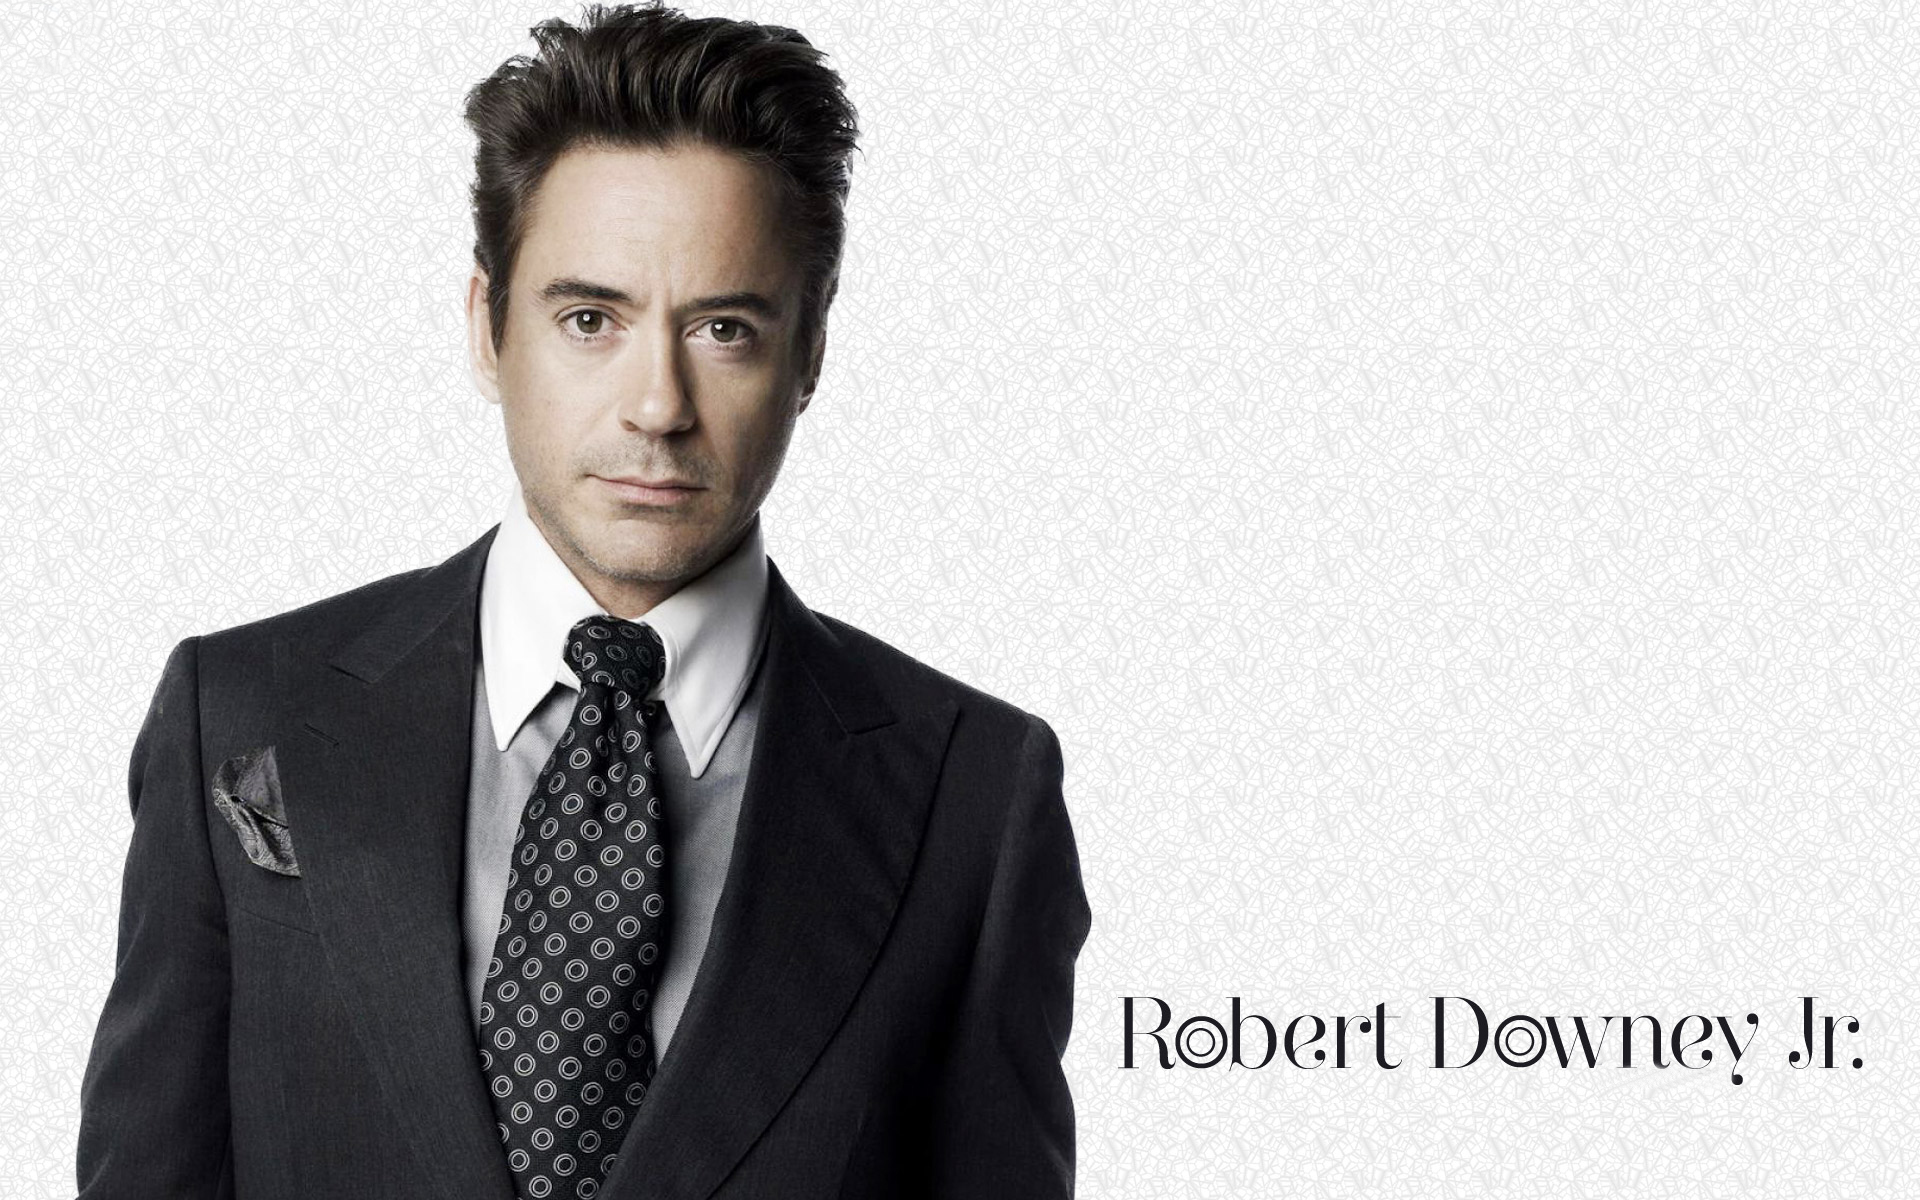 Beloved Actor Robert Downey Jr Wallpaper And Image